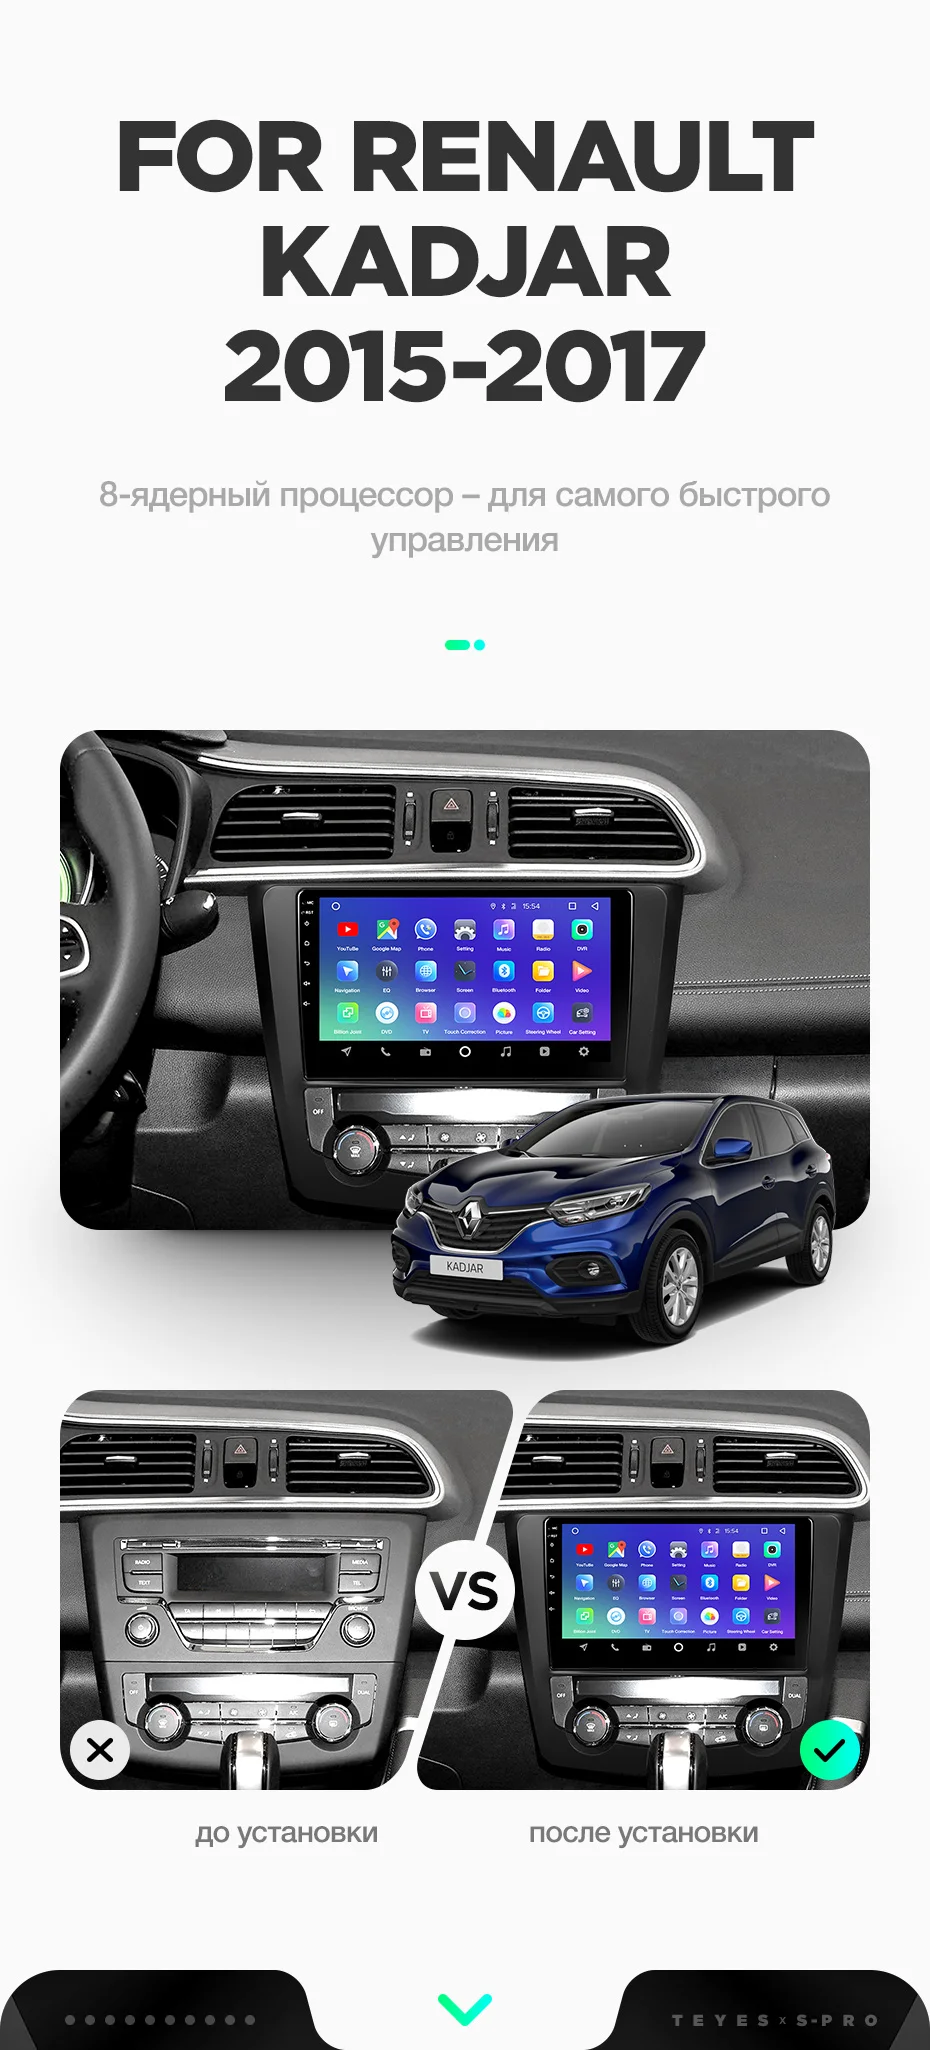 TEYES SPRO Штатная магнитола для Рено Каджар Renault Kadjar Android 8.1, до 8-ЯДЕР, до 4+ 64ГБ 32EQ+ DSP 2DIN автомагнитола 2 DIN DVD GPS мультимедиа автомобиля головное устройство